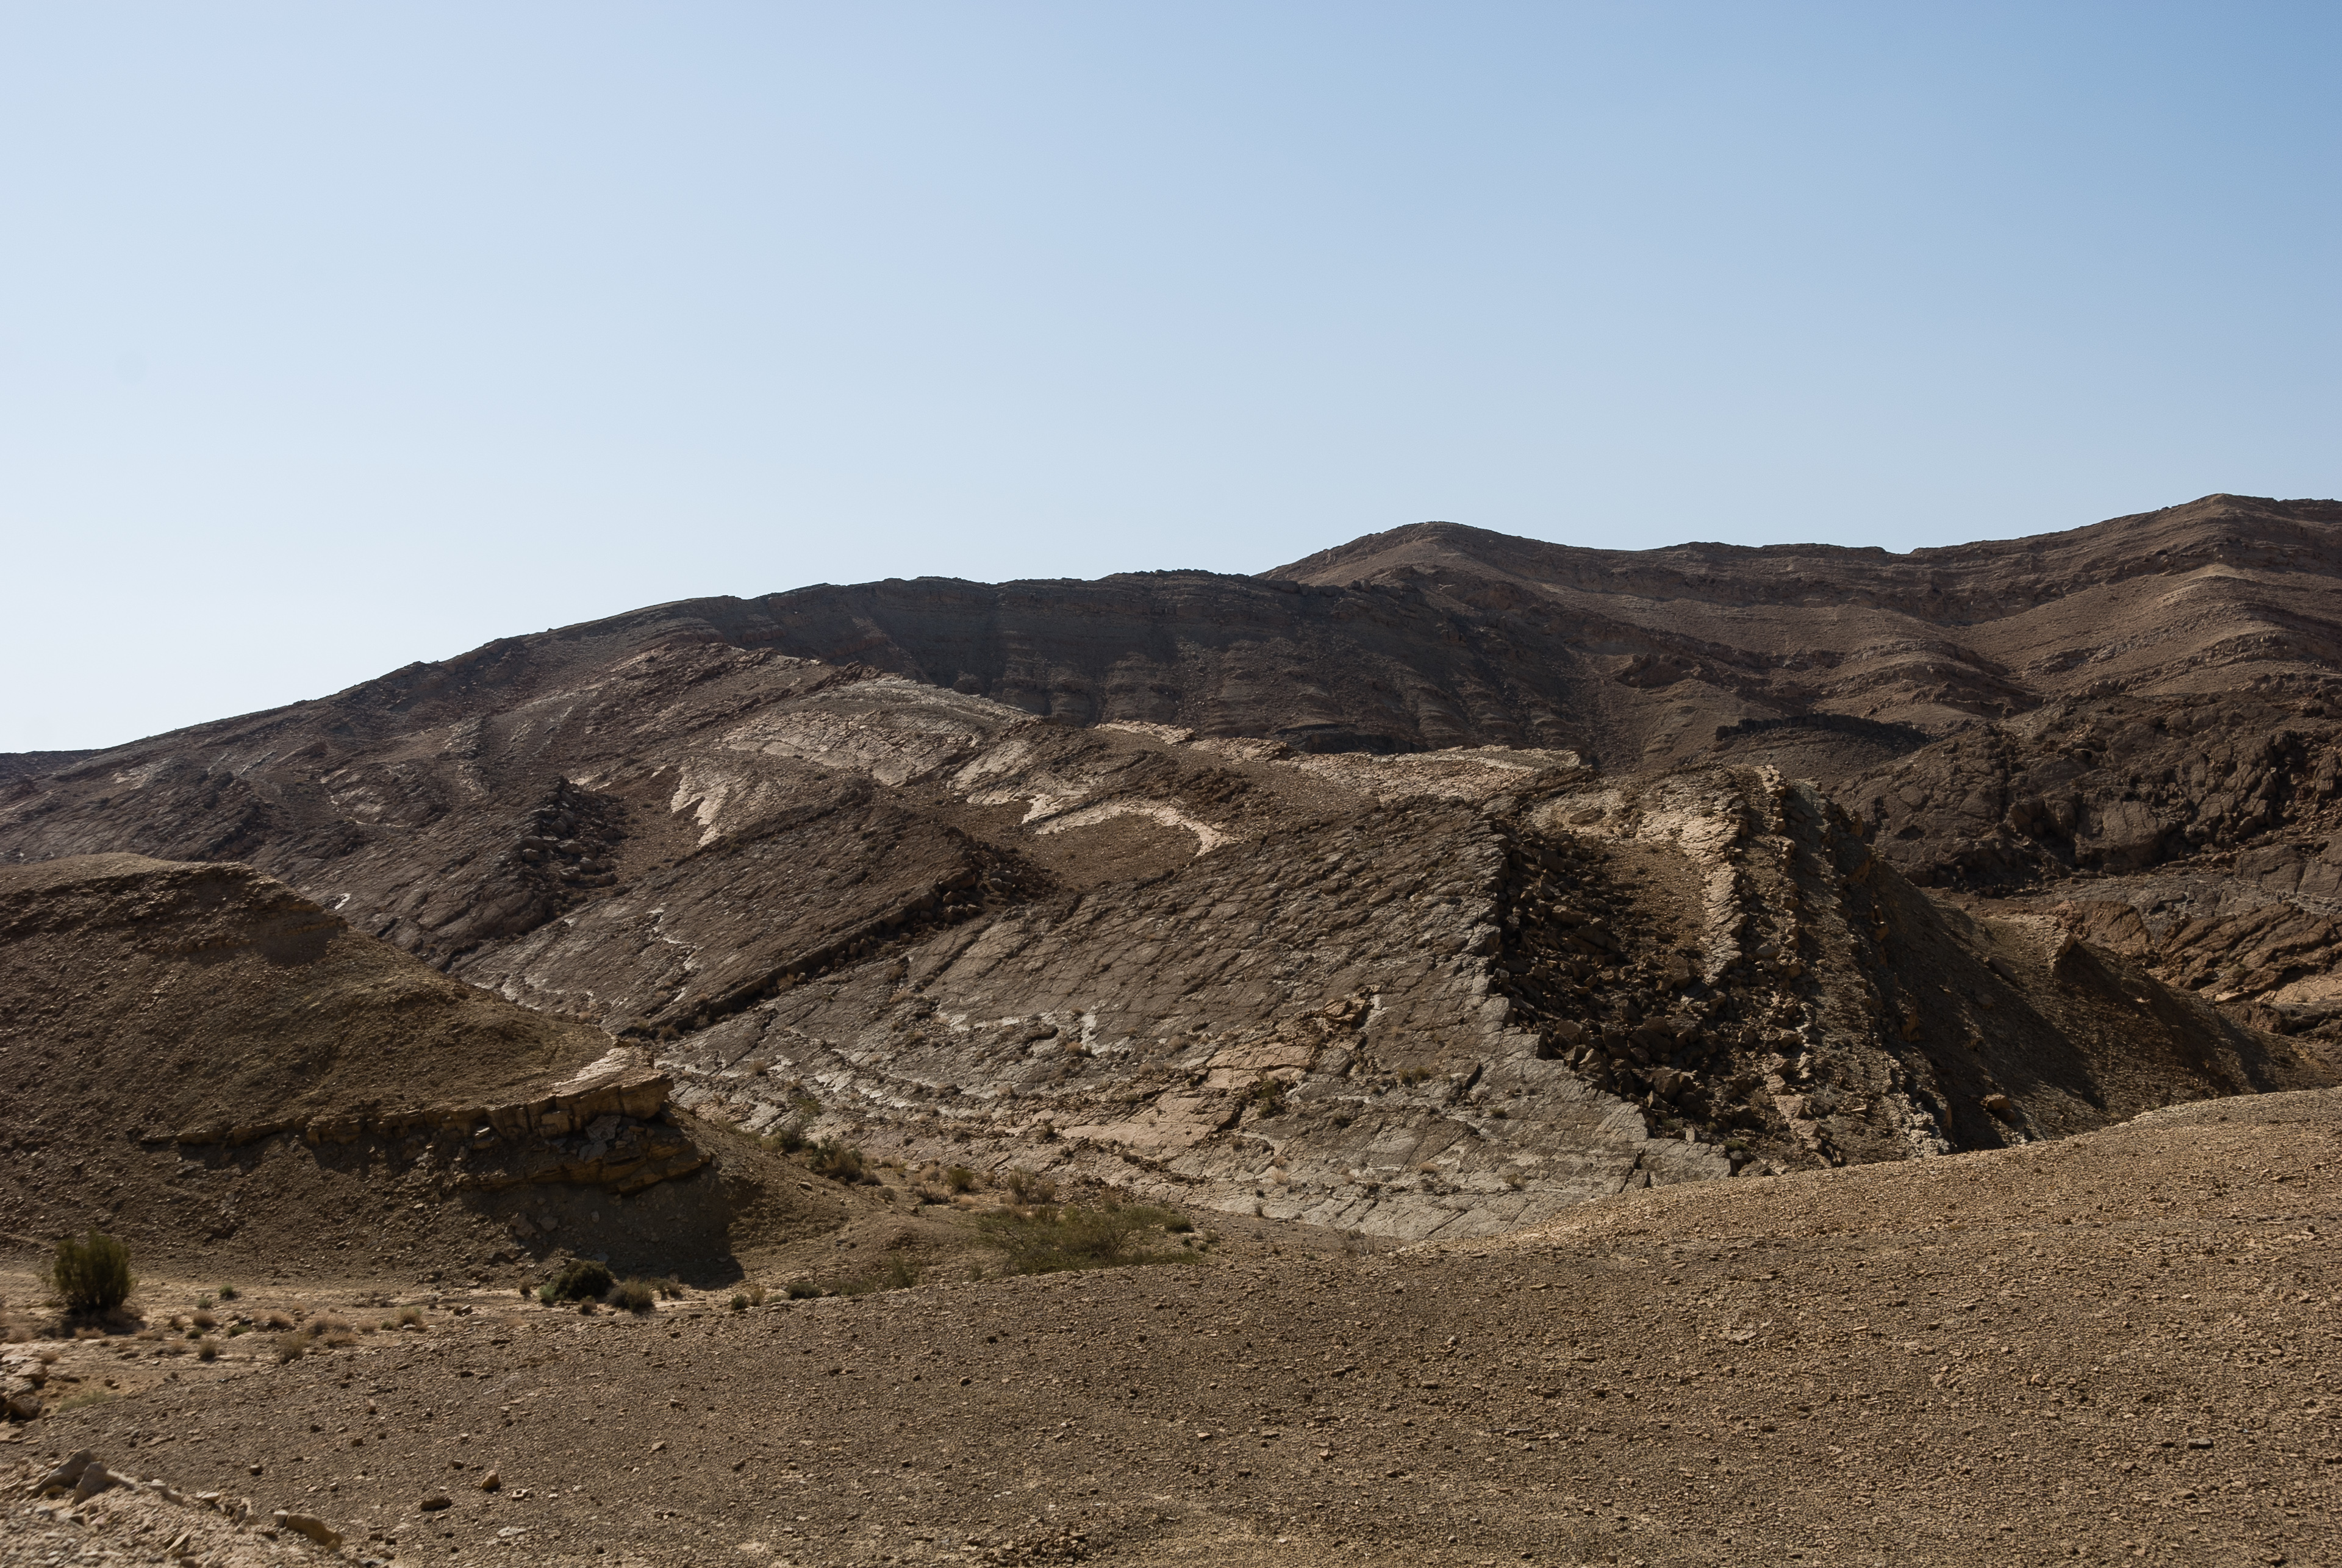 Caravansary, Israel, Maktesh Ramon, Negev, Saharonim Springs, Spice Route